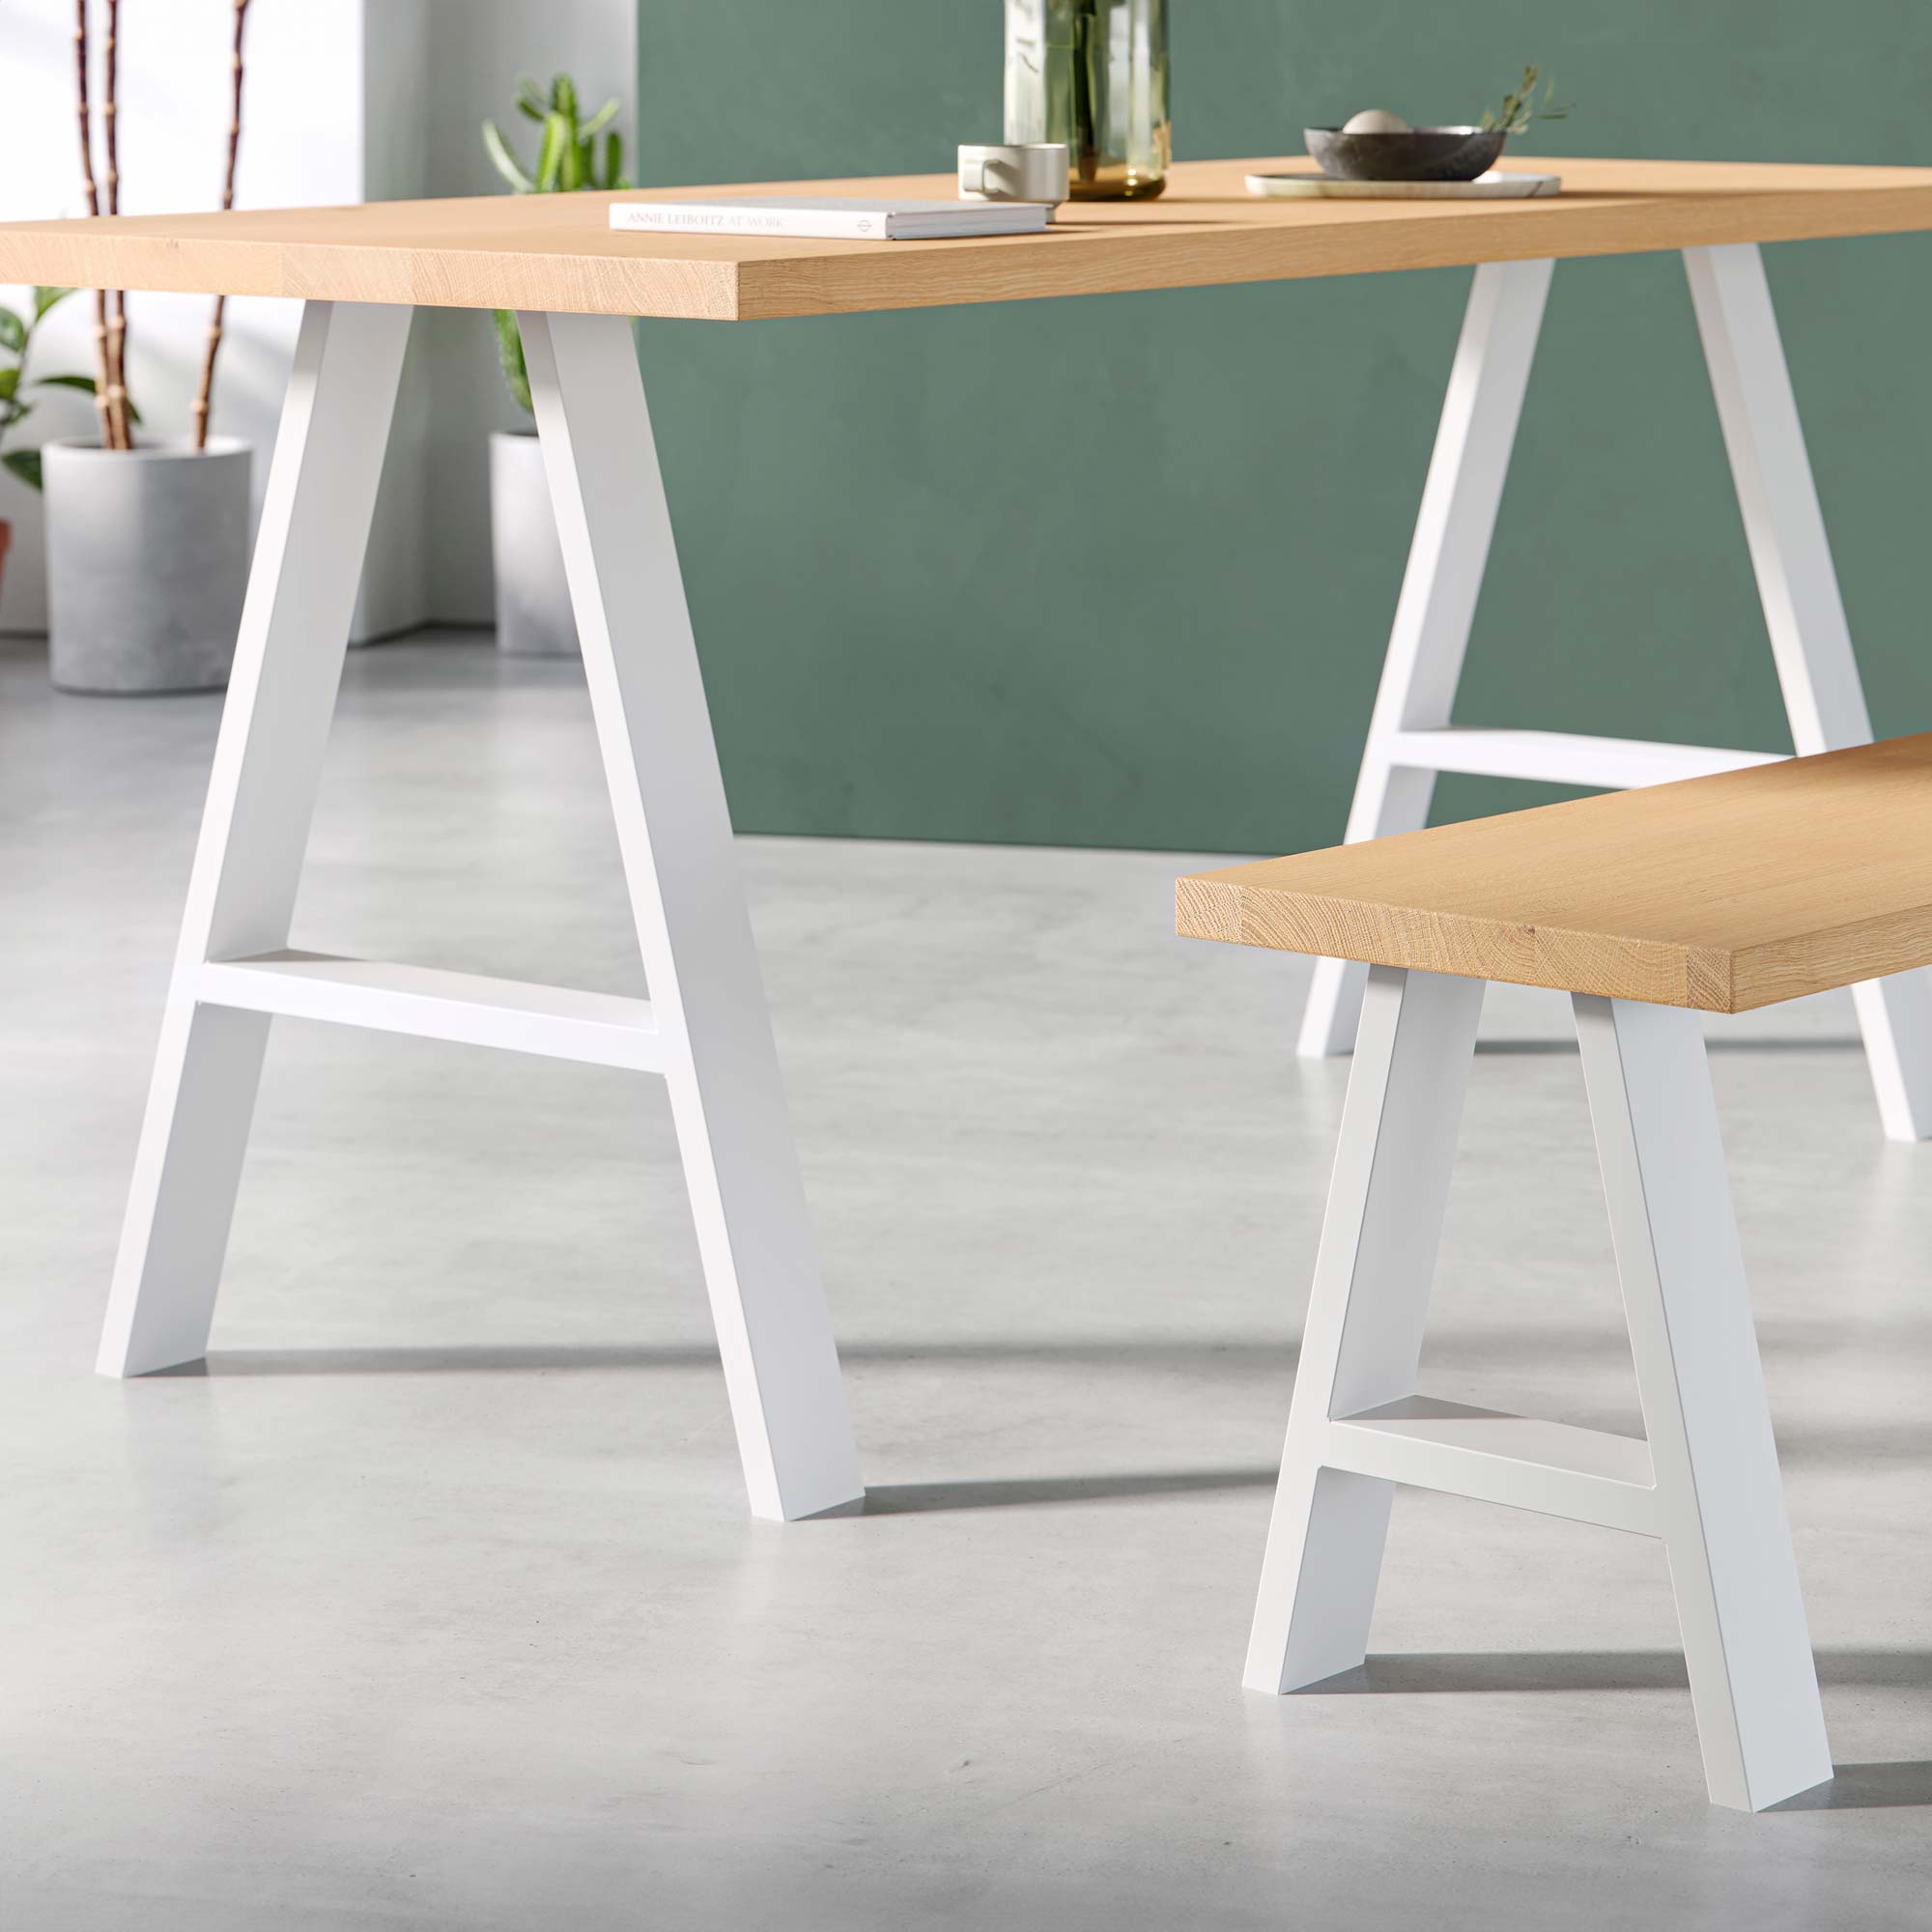 A-Frame Industrial legs-Table (H71cm x W58cm)-White-The Hairpin Leg Co.